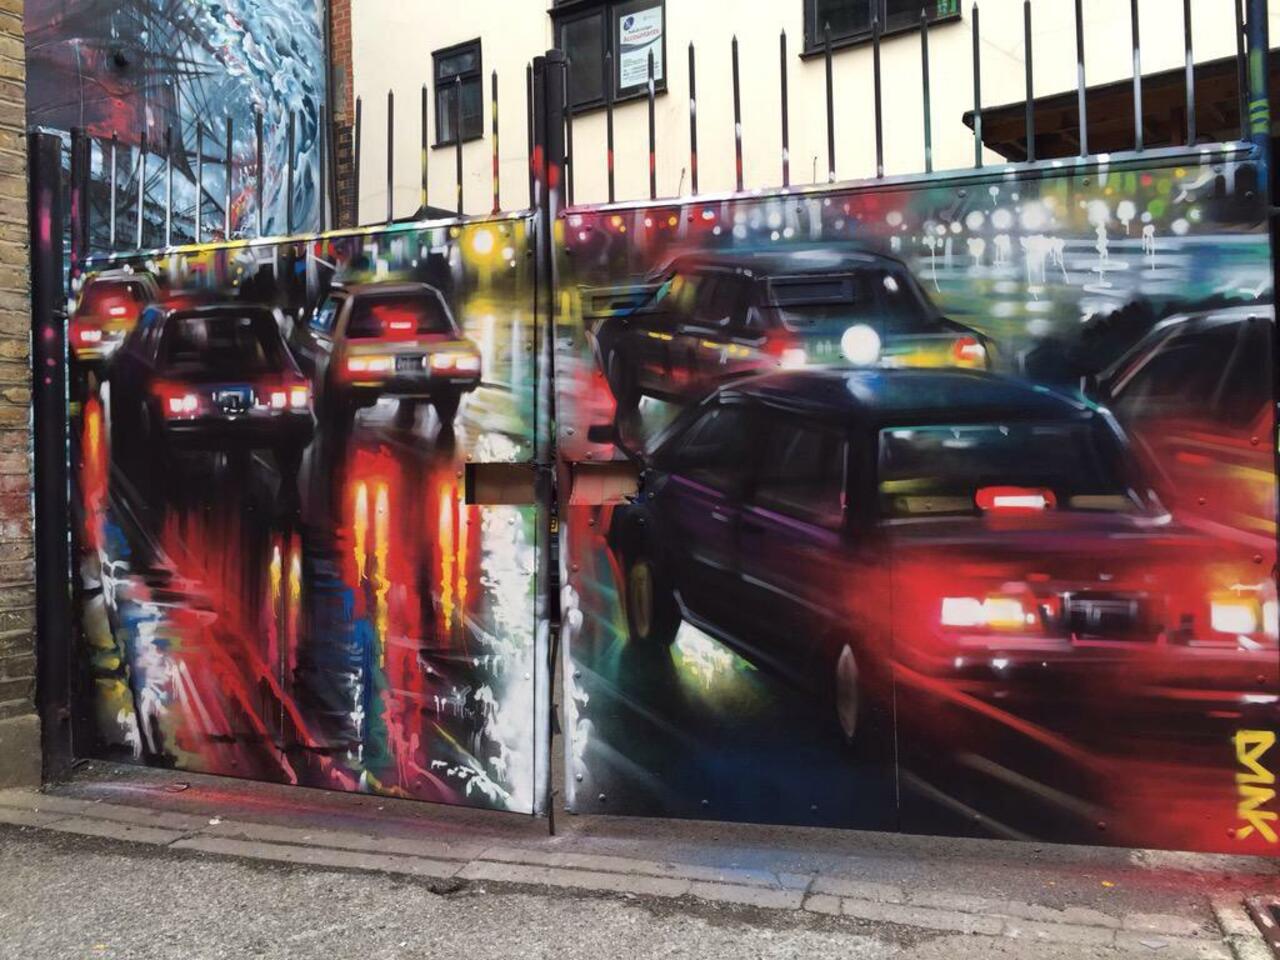 #satvadesignstudio : New Street Art by DanKitchener in Brick Lane London 

#art #graffiti #mural #streetart http://t.co/4OA4tPfZu9